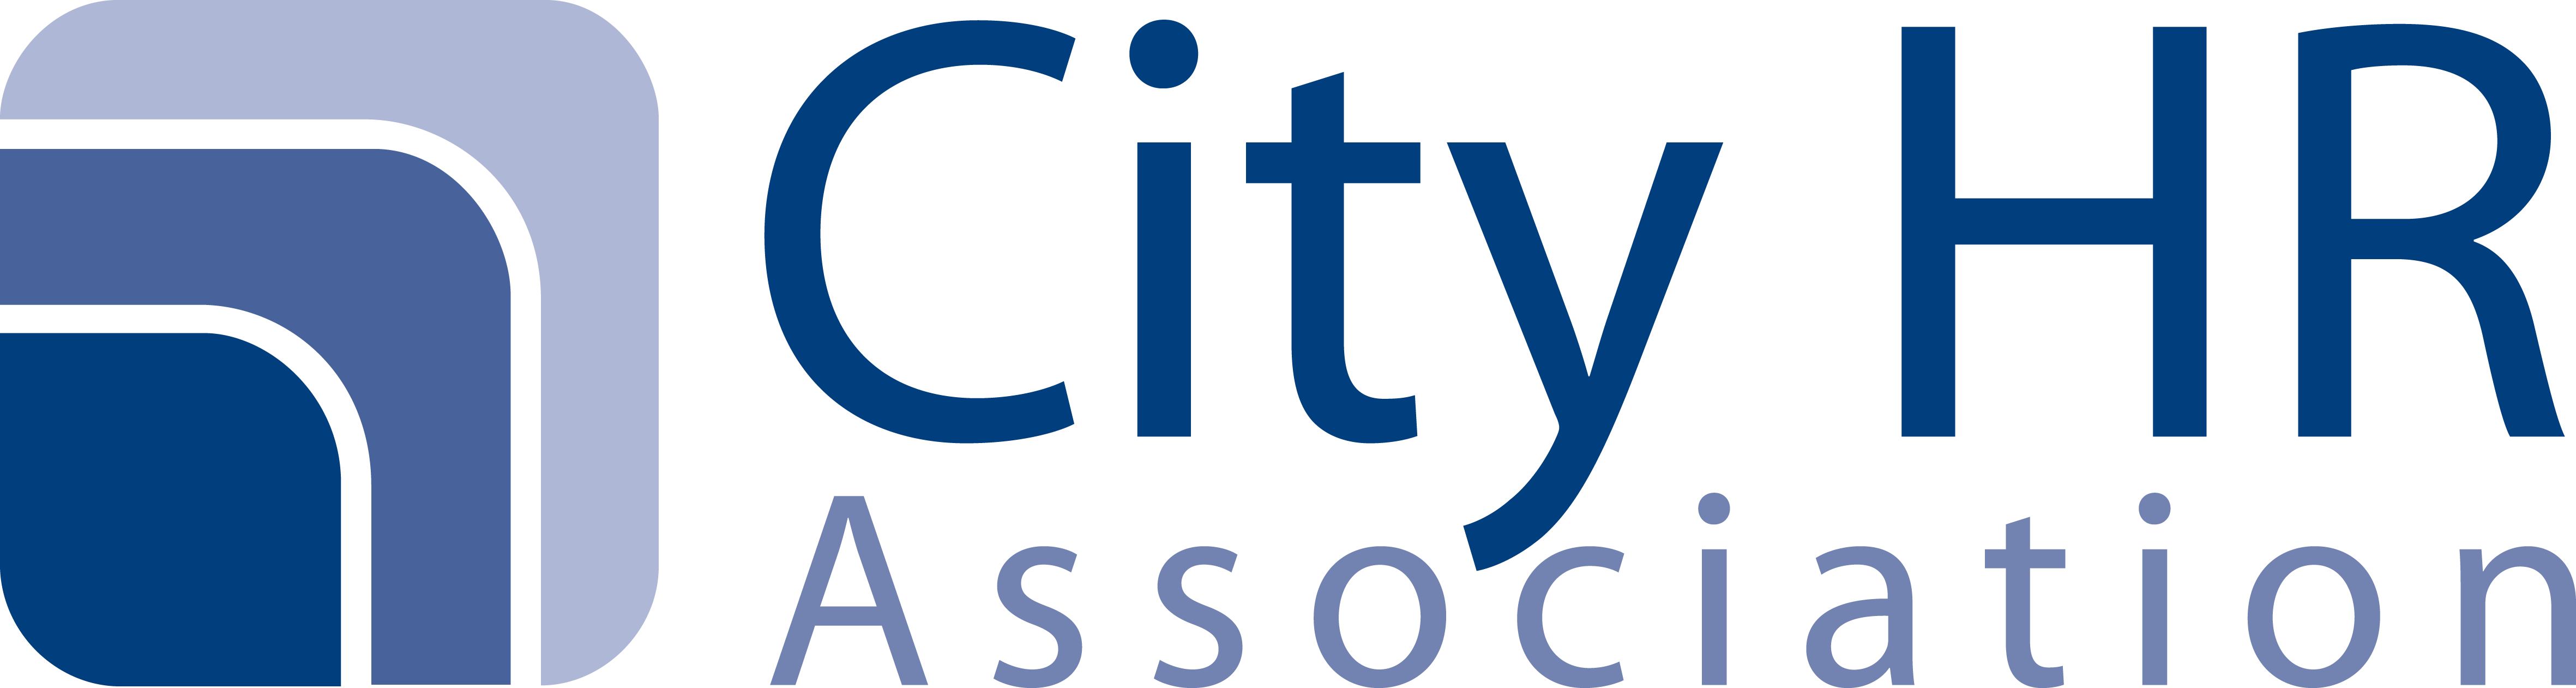 logo for City HR Association Ltd.